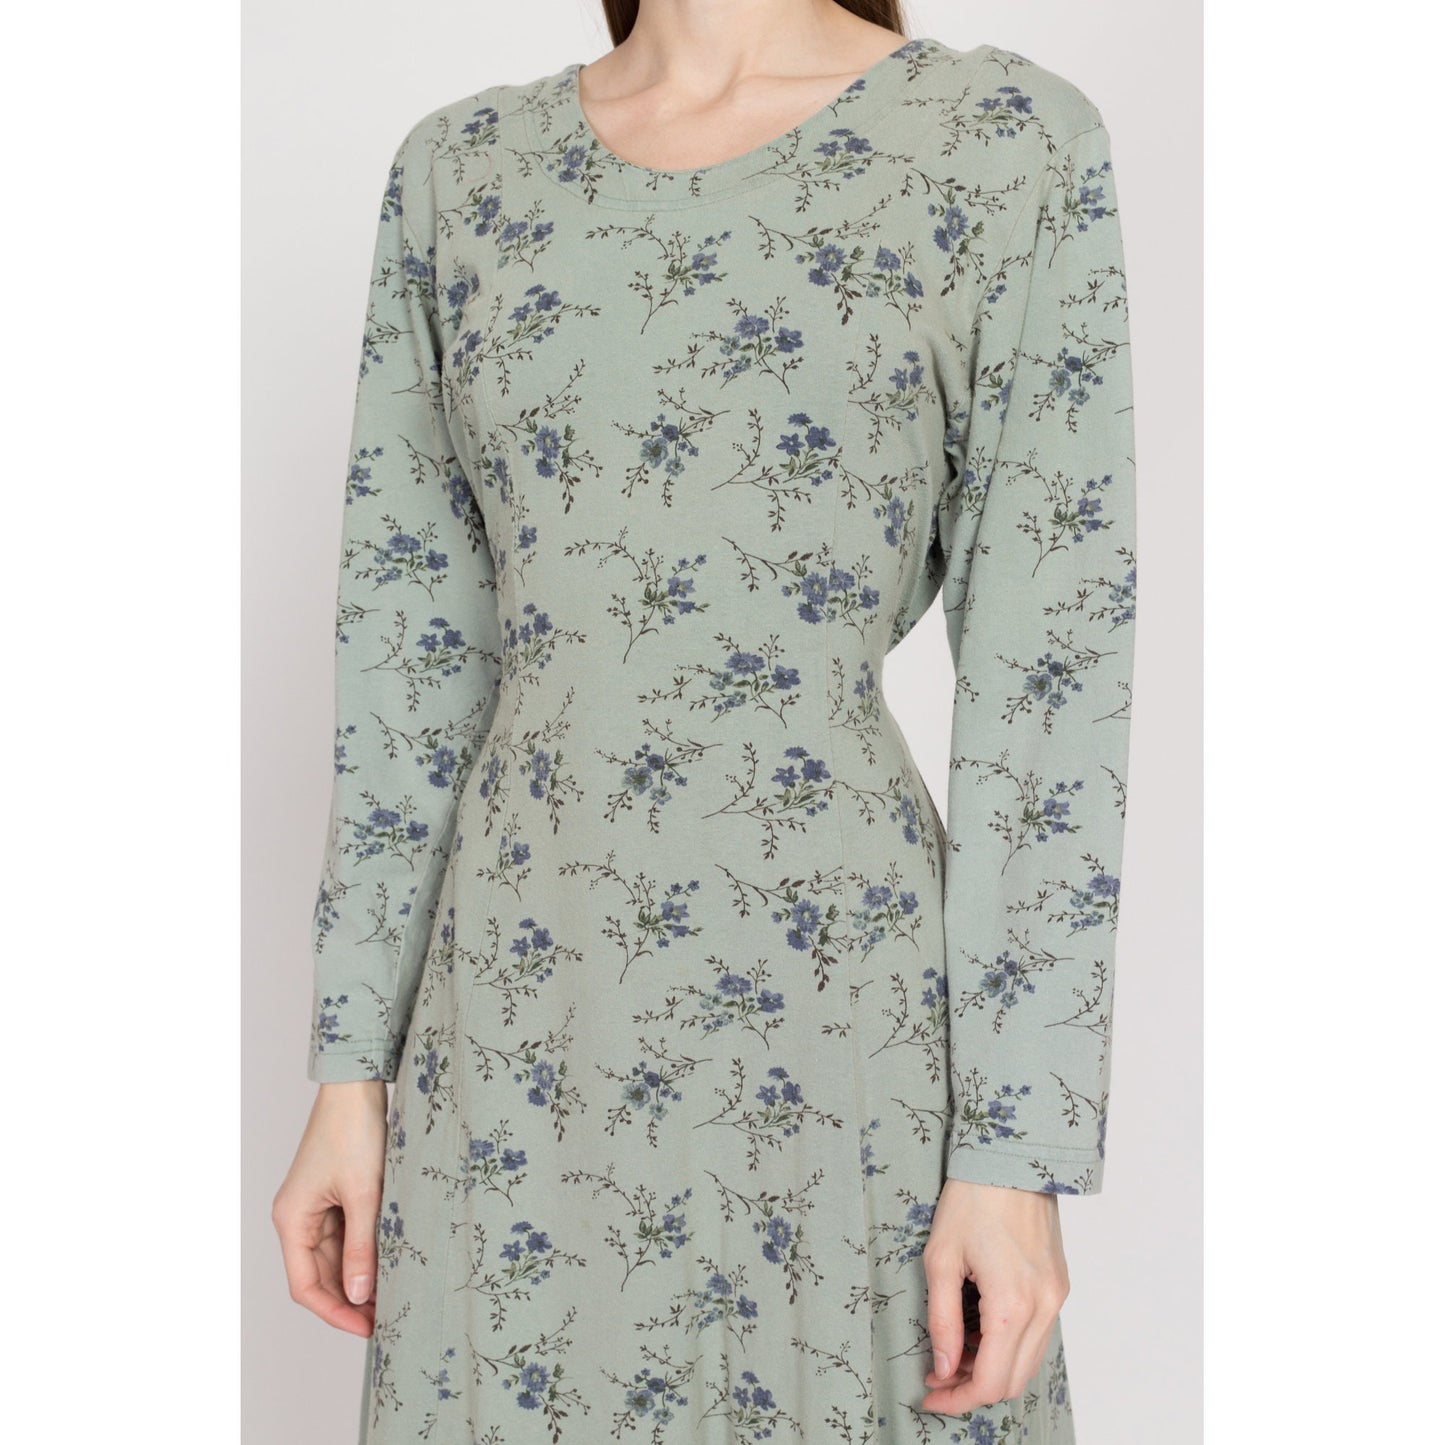 Medium 80s Sage Green Floral Long Sleeve Maxi Dress | Vintage Cotton Grunge Tie Back Dress